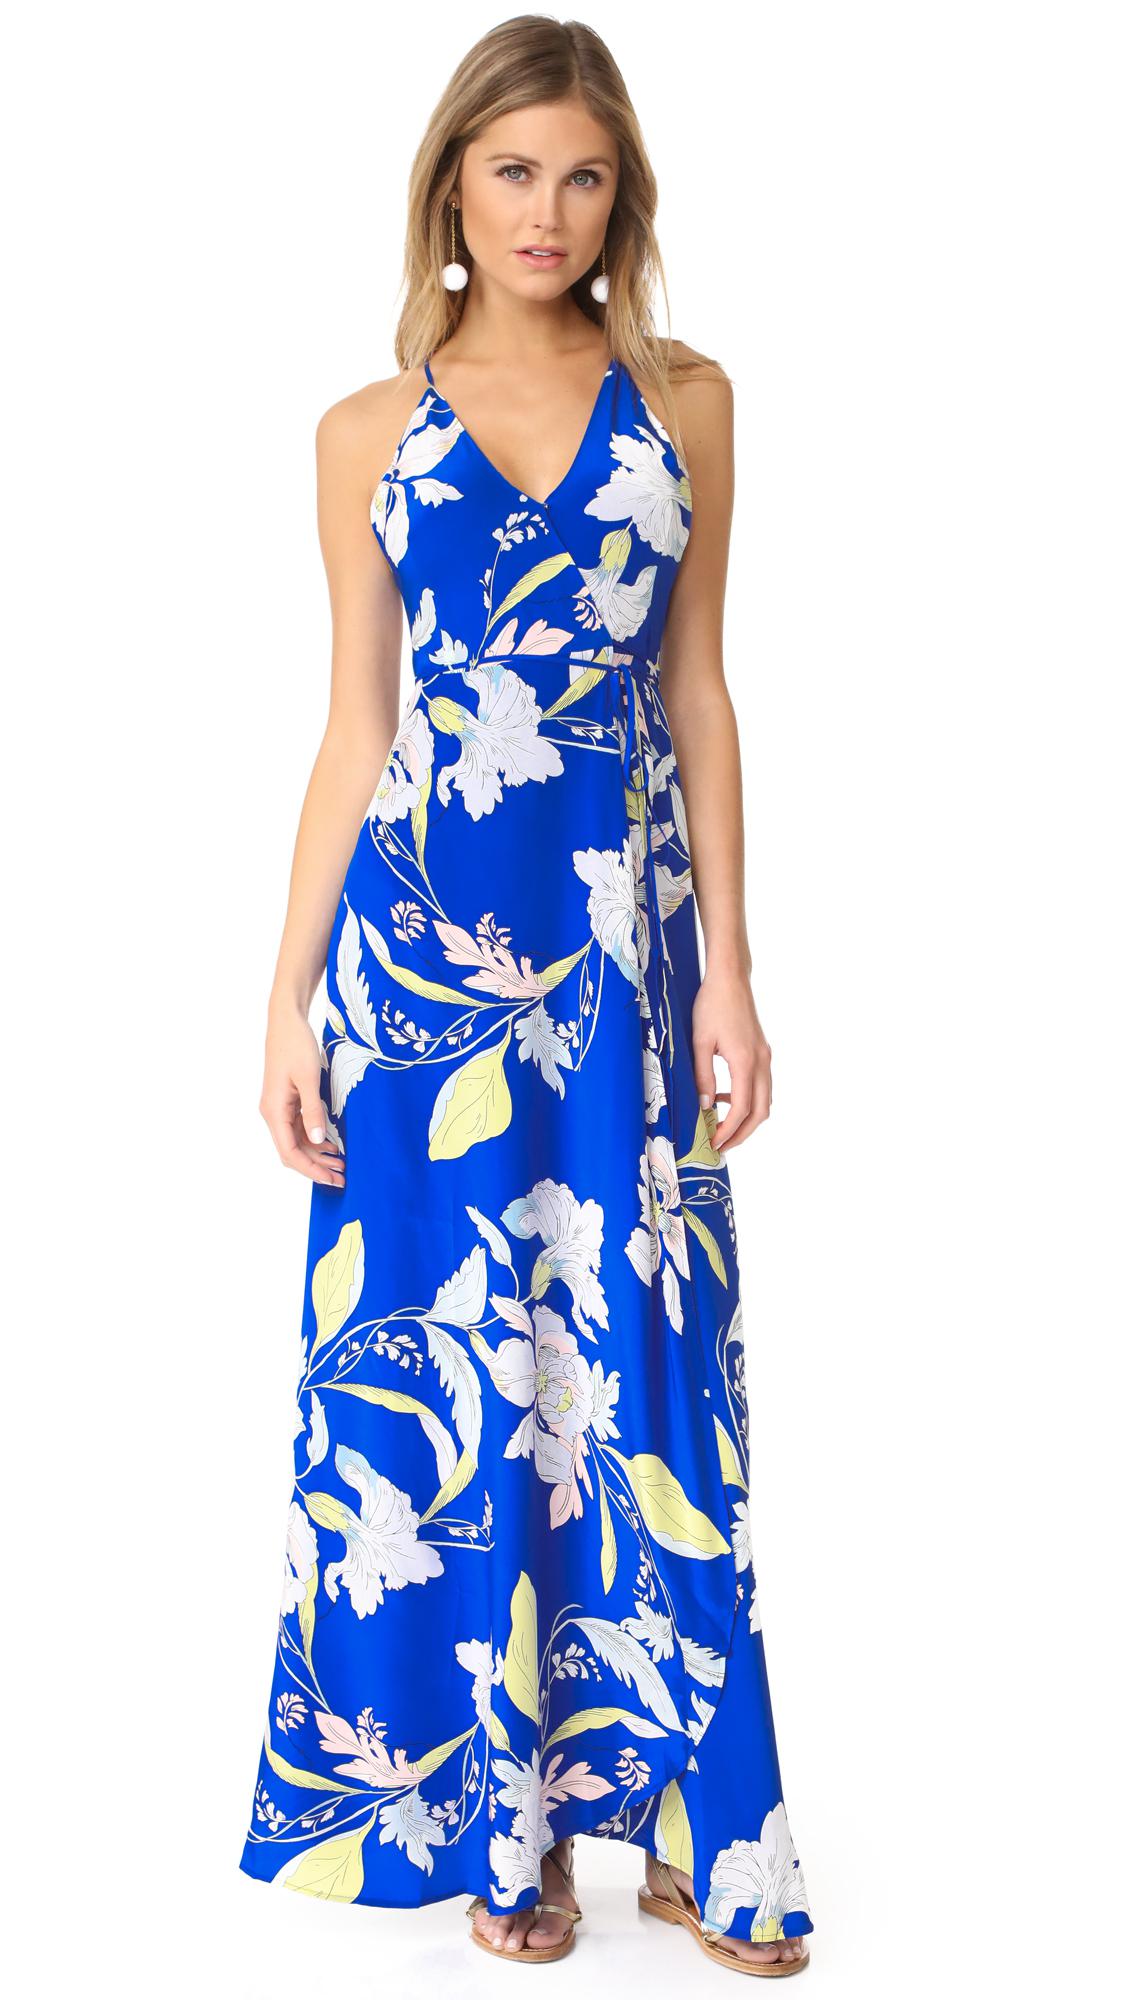 Yumi Kim Rush Hour Maxi Dress in Blue - Lyst